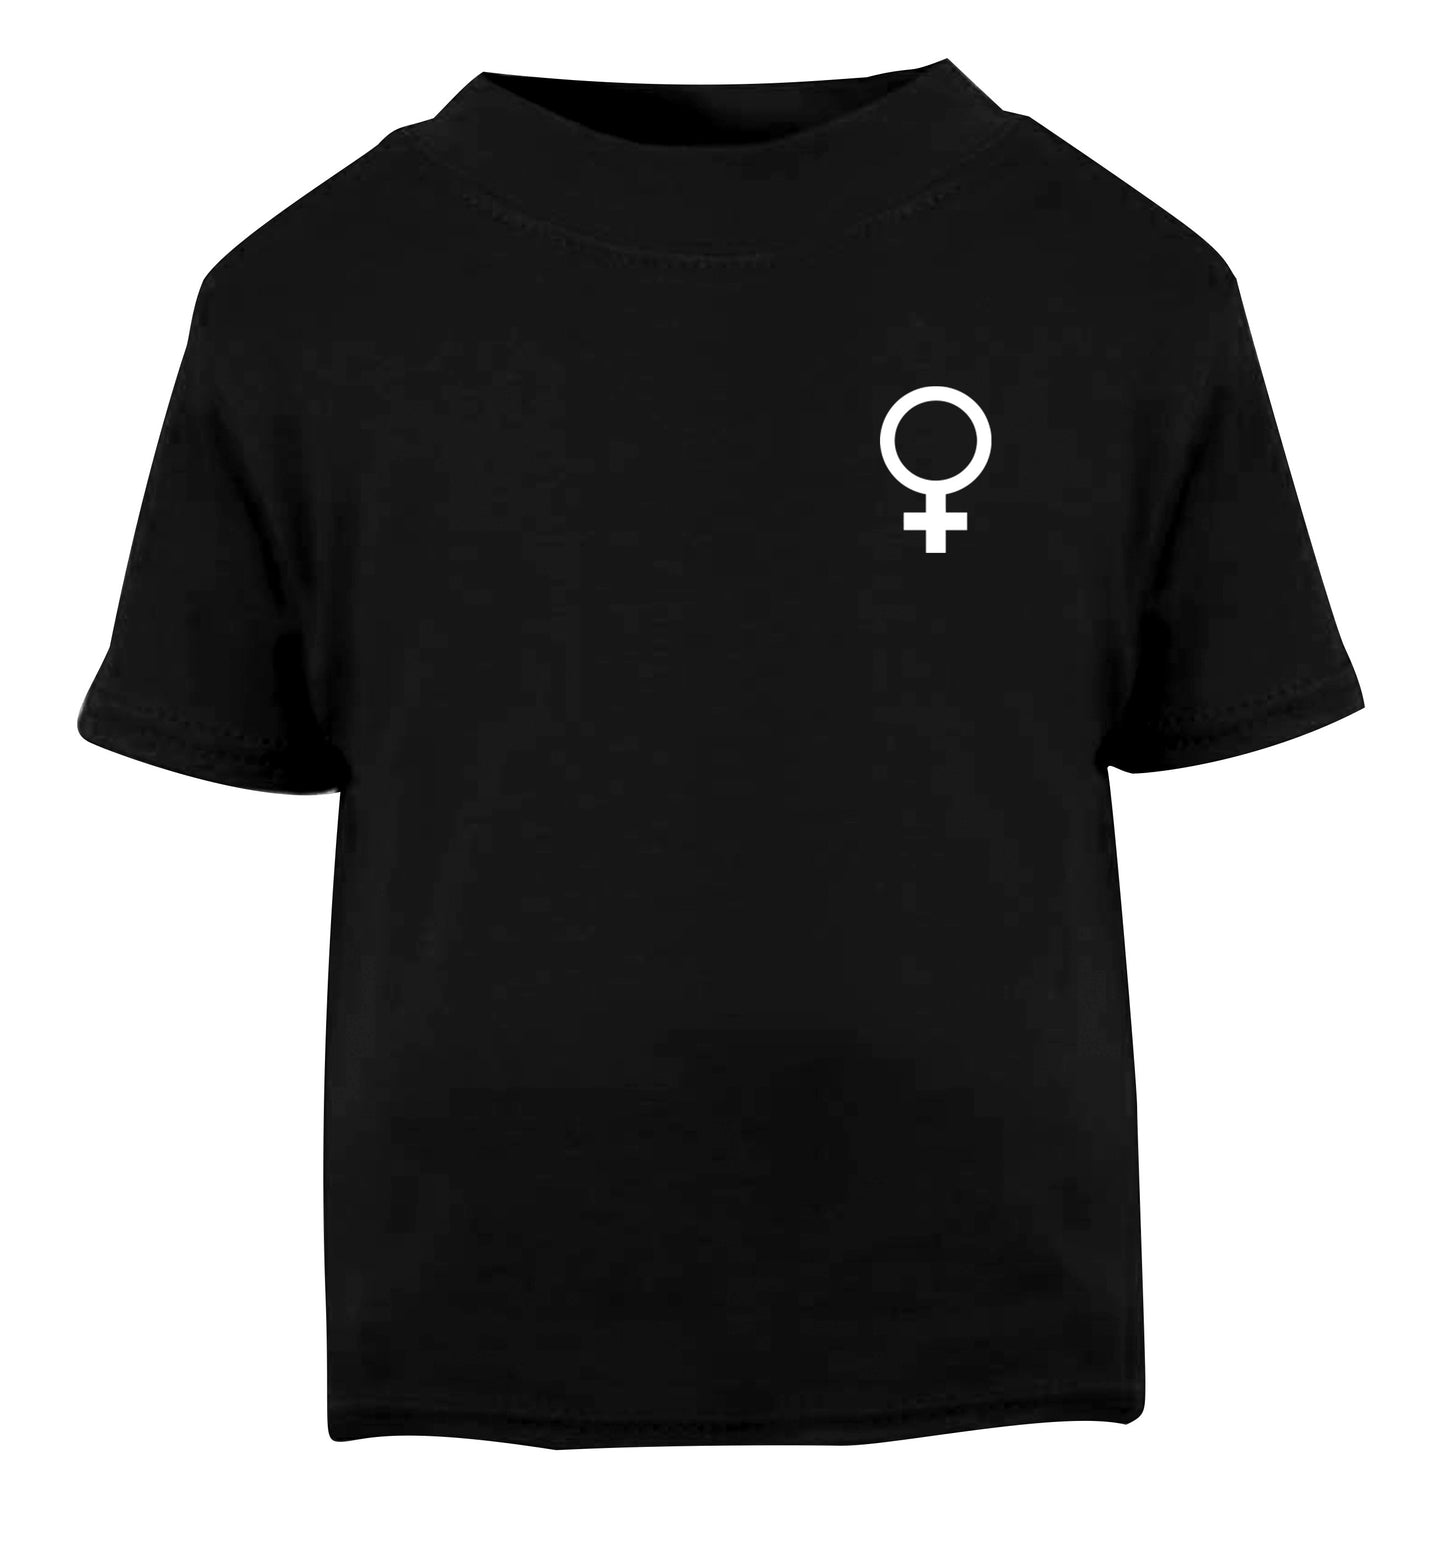 Female pocket symbol Black Baby Toddler Tshirt 2 years